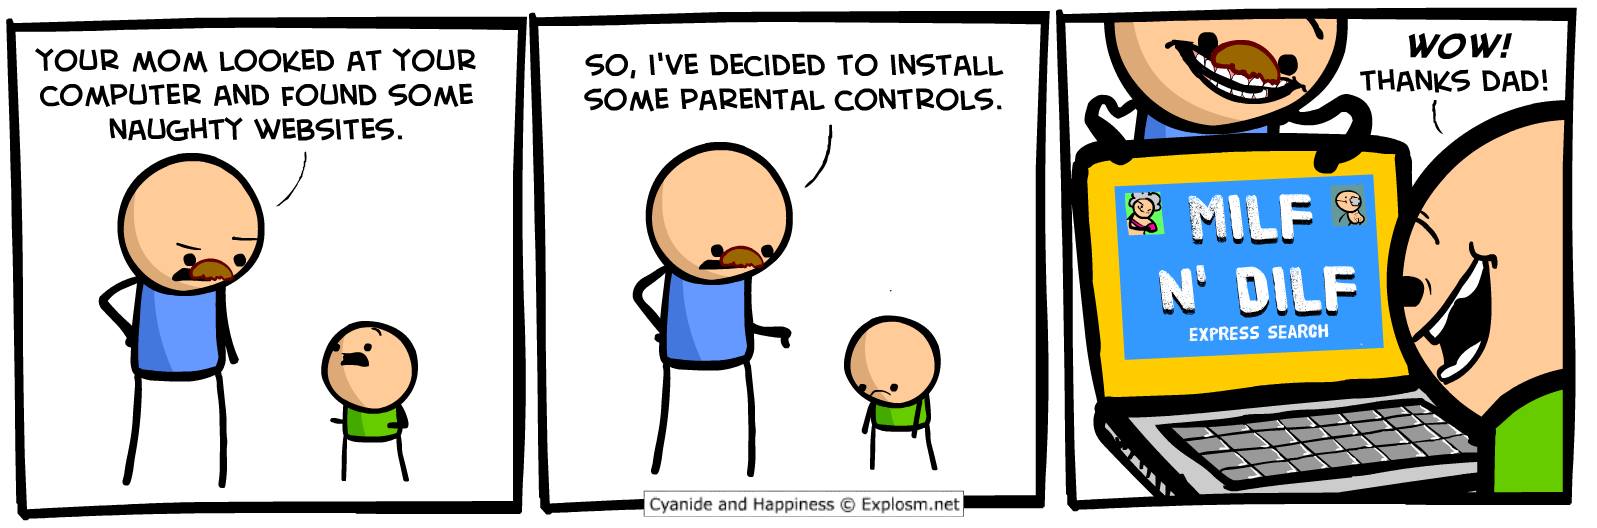 parentalcontrols.jpg